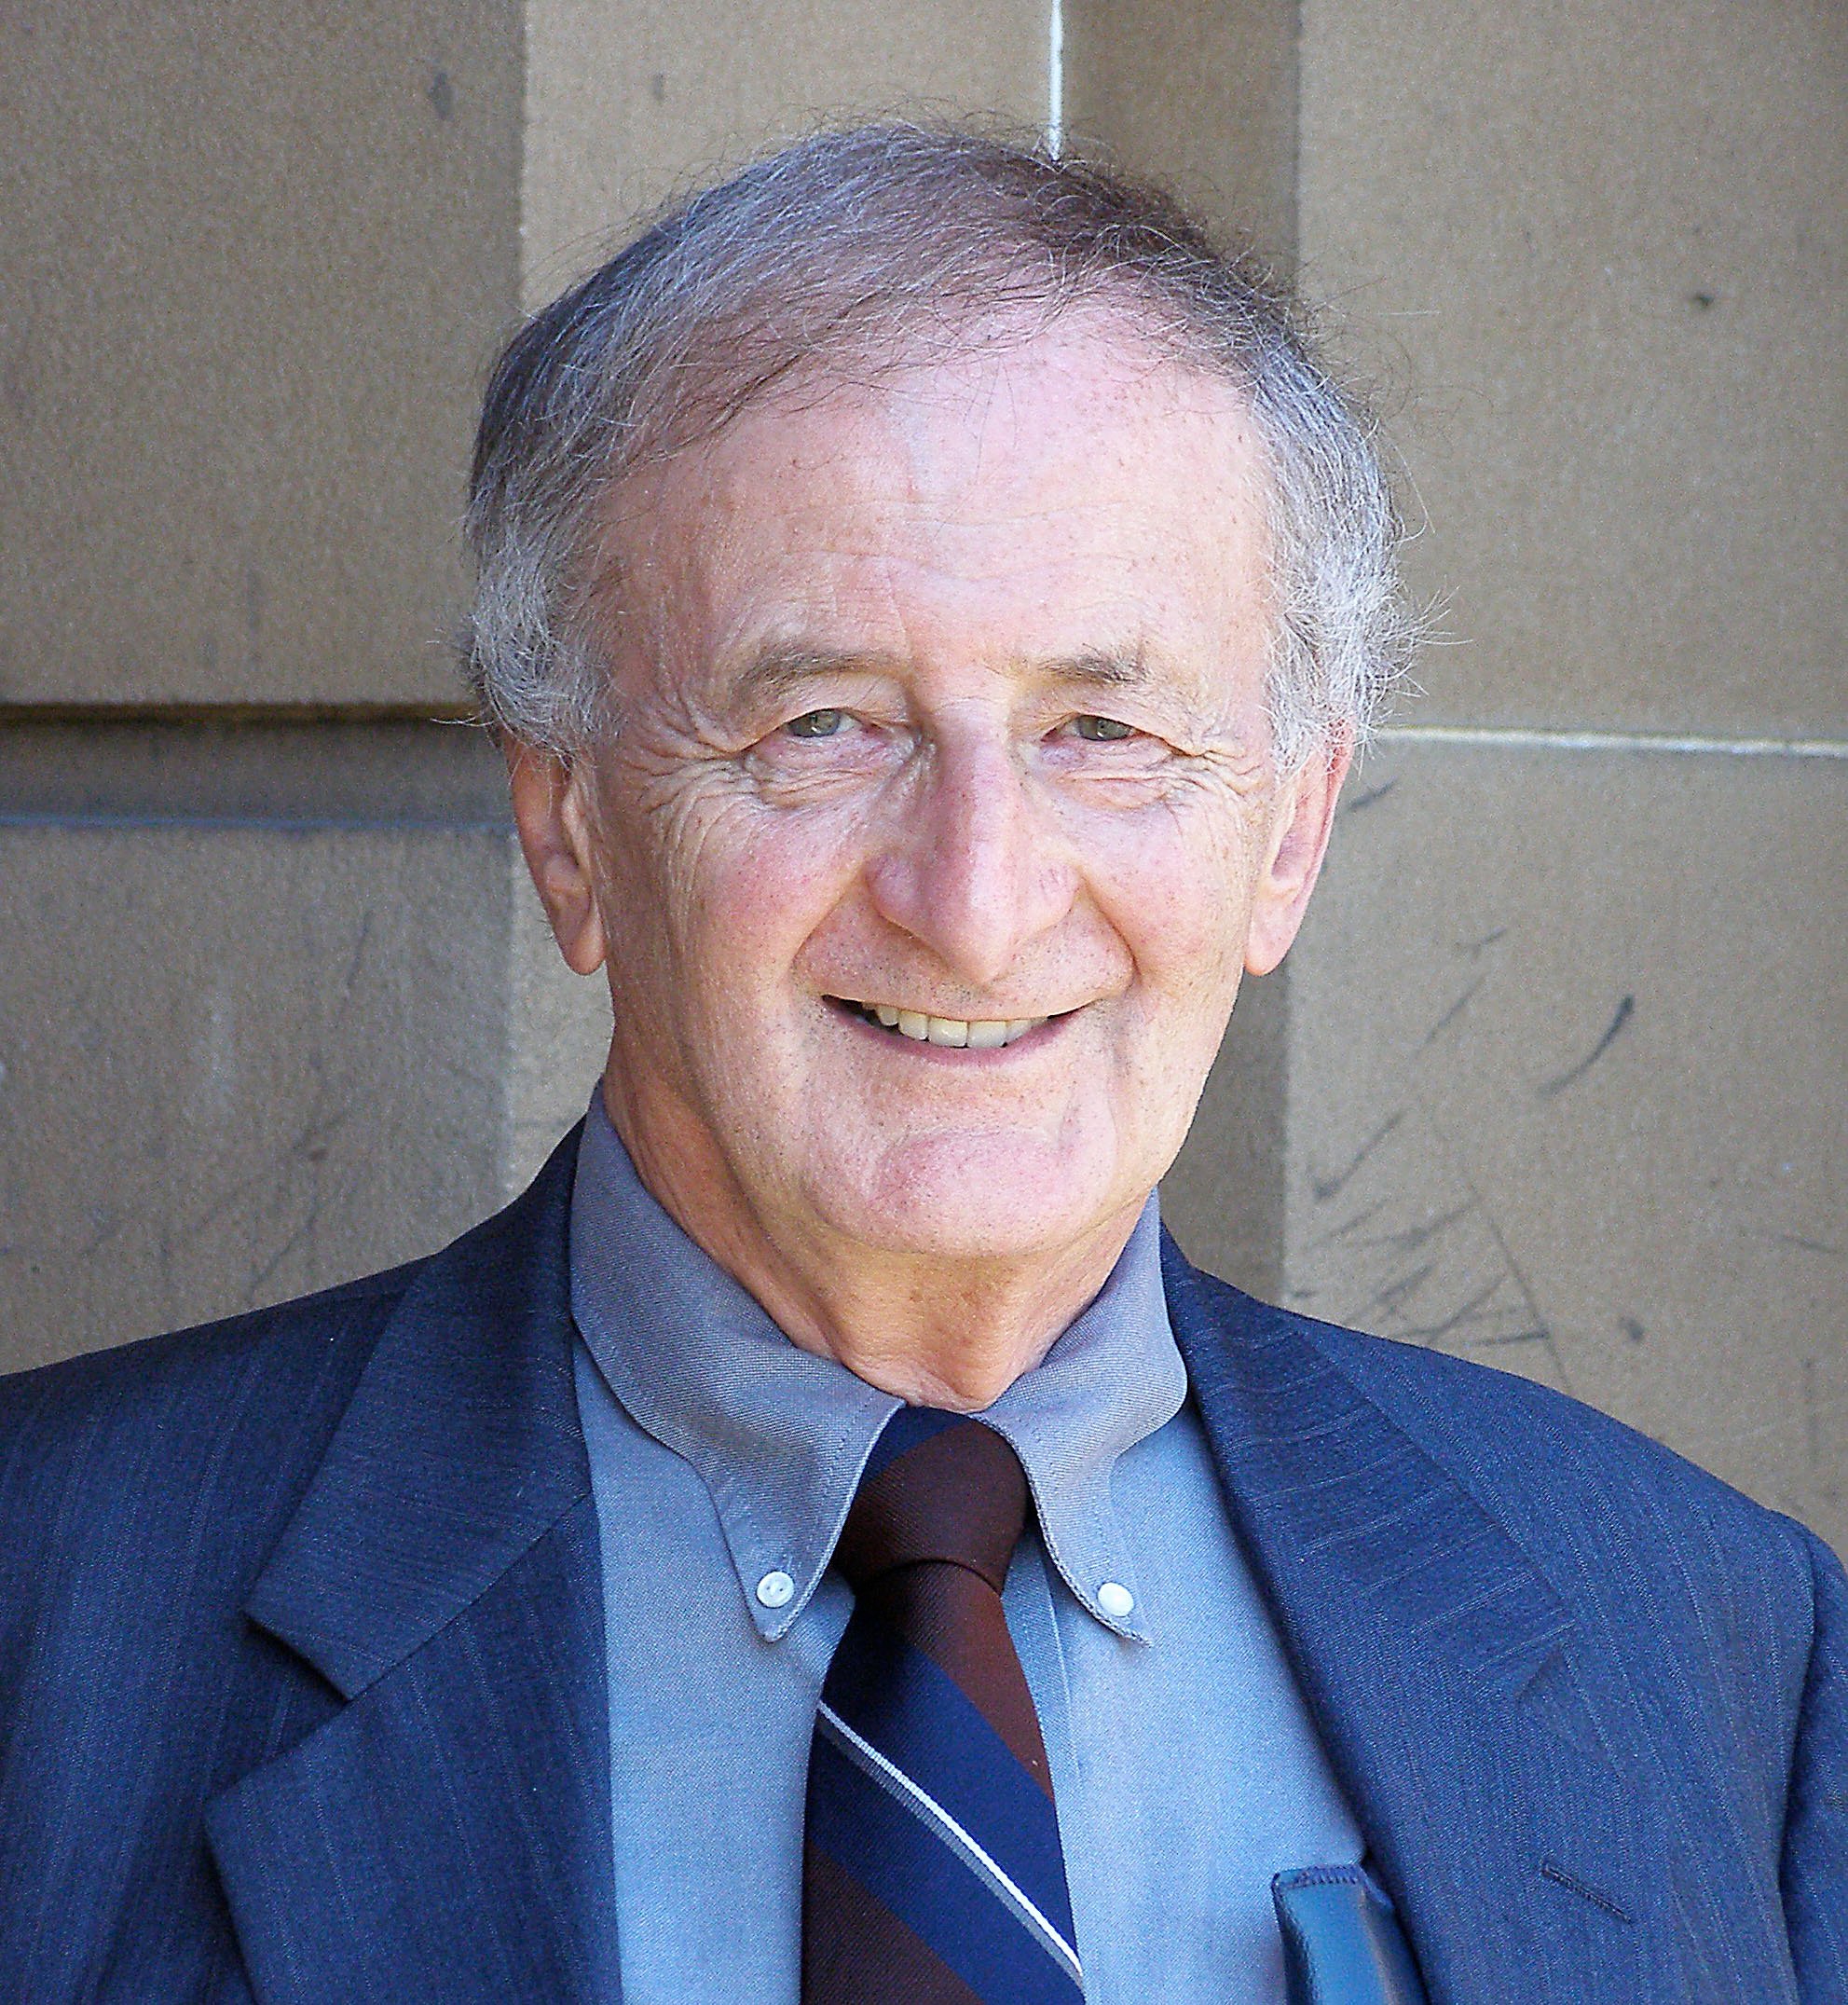 Prof. Harry Prosen, former President of the Canadian Psychiatric Assoc.